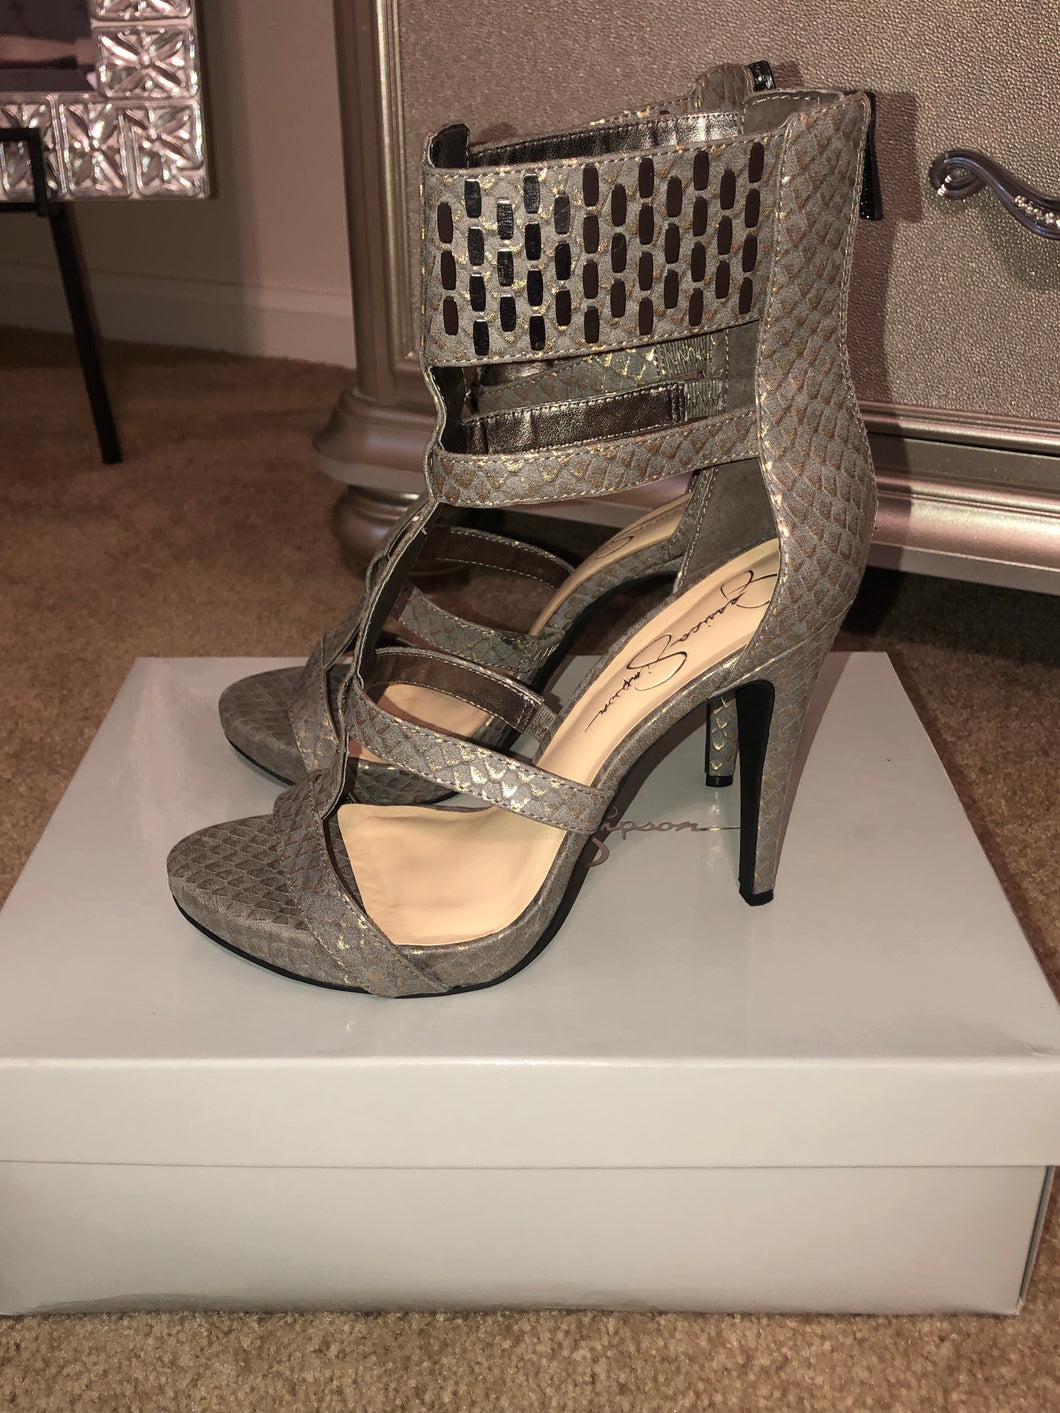 Jessica Simpson Caged Sandals - US 8.5